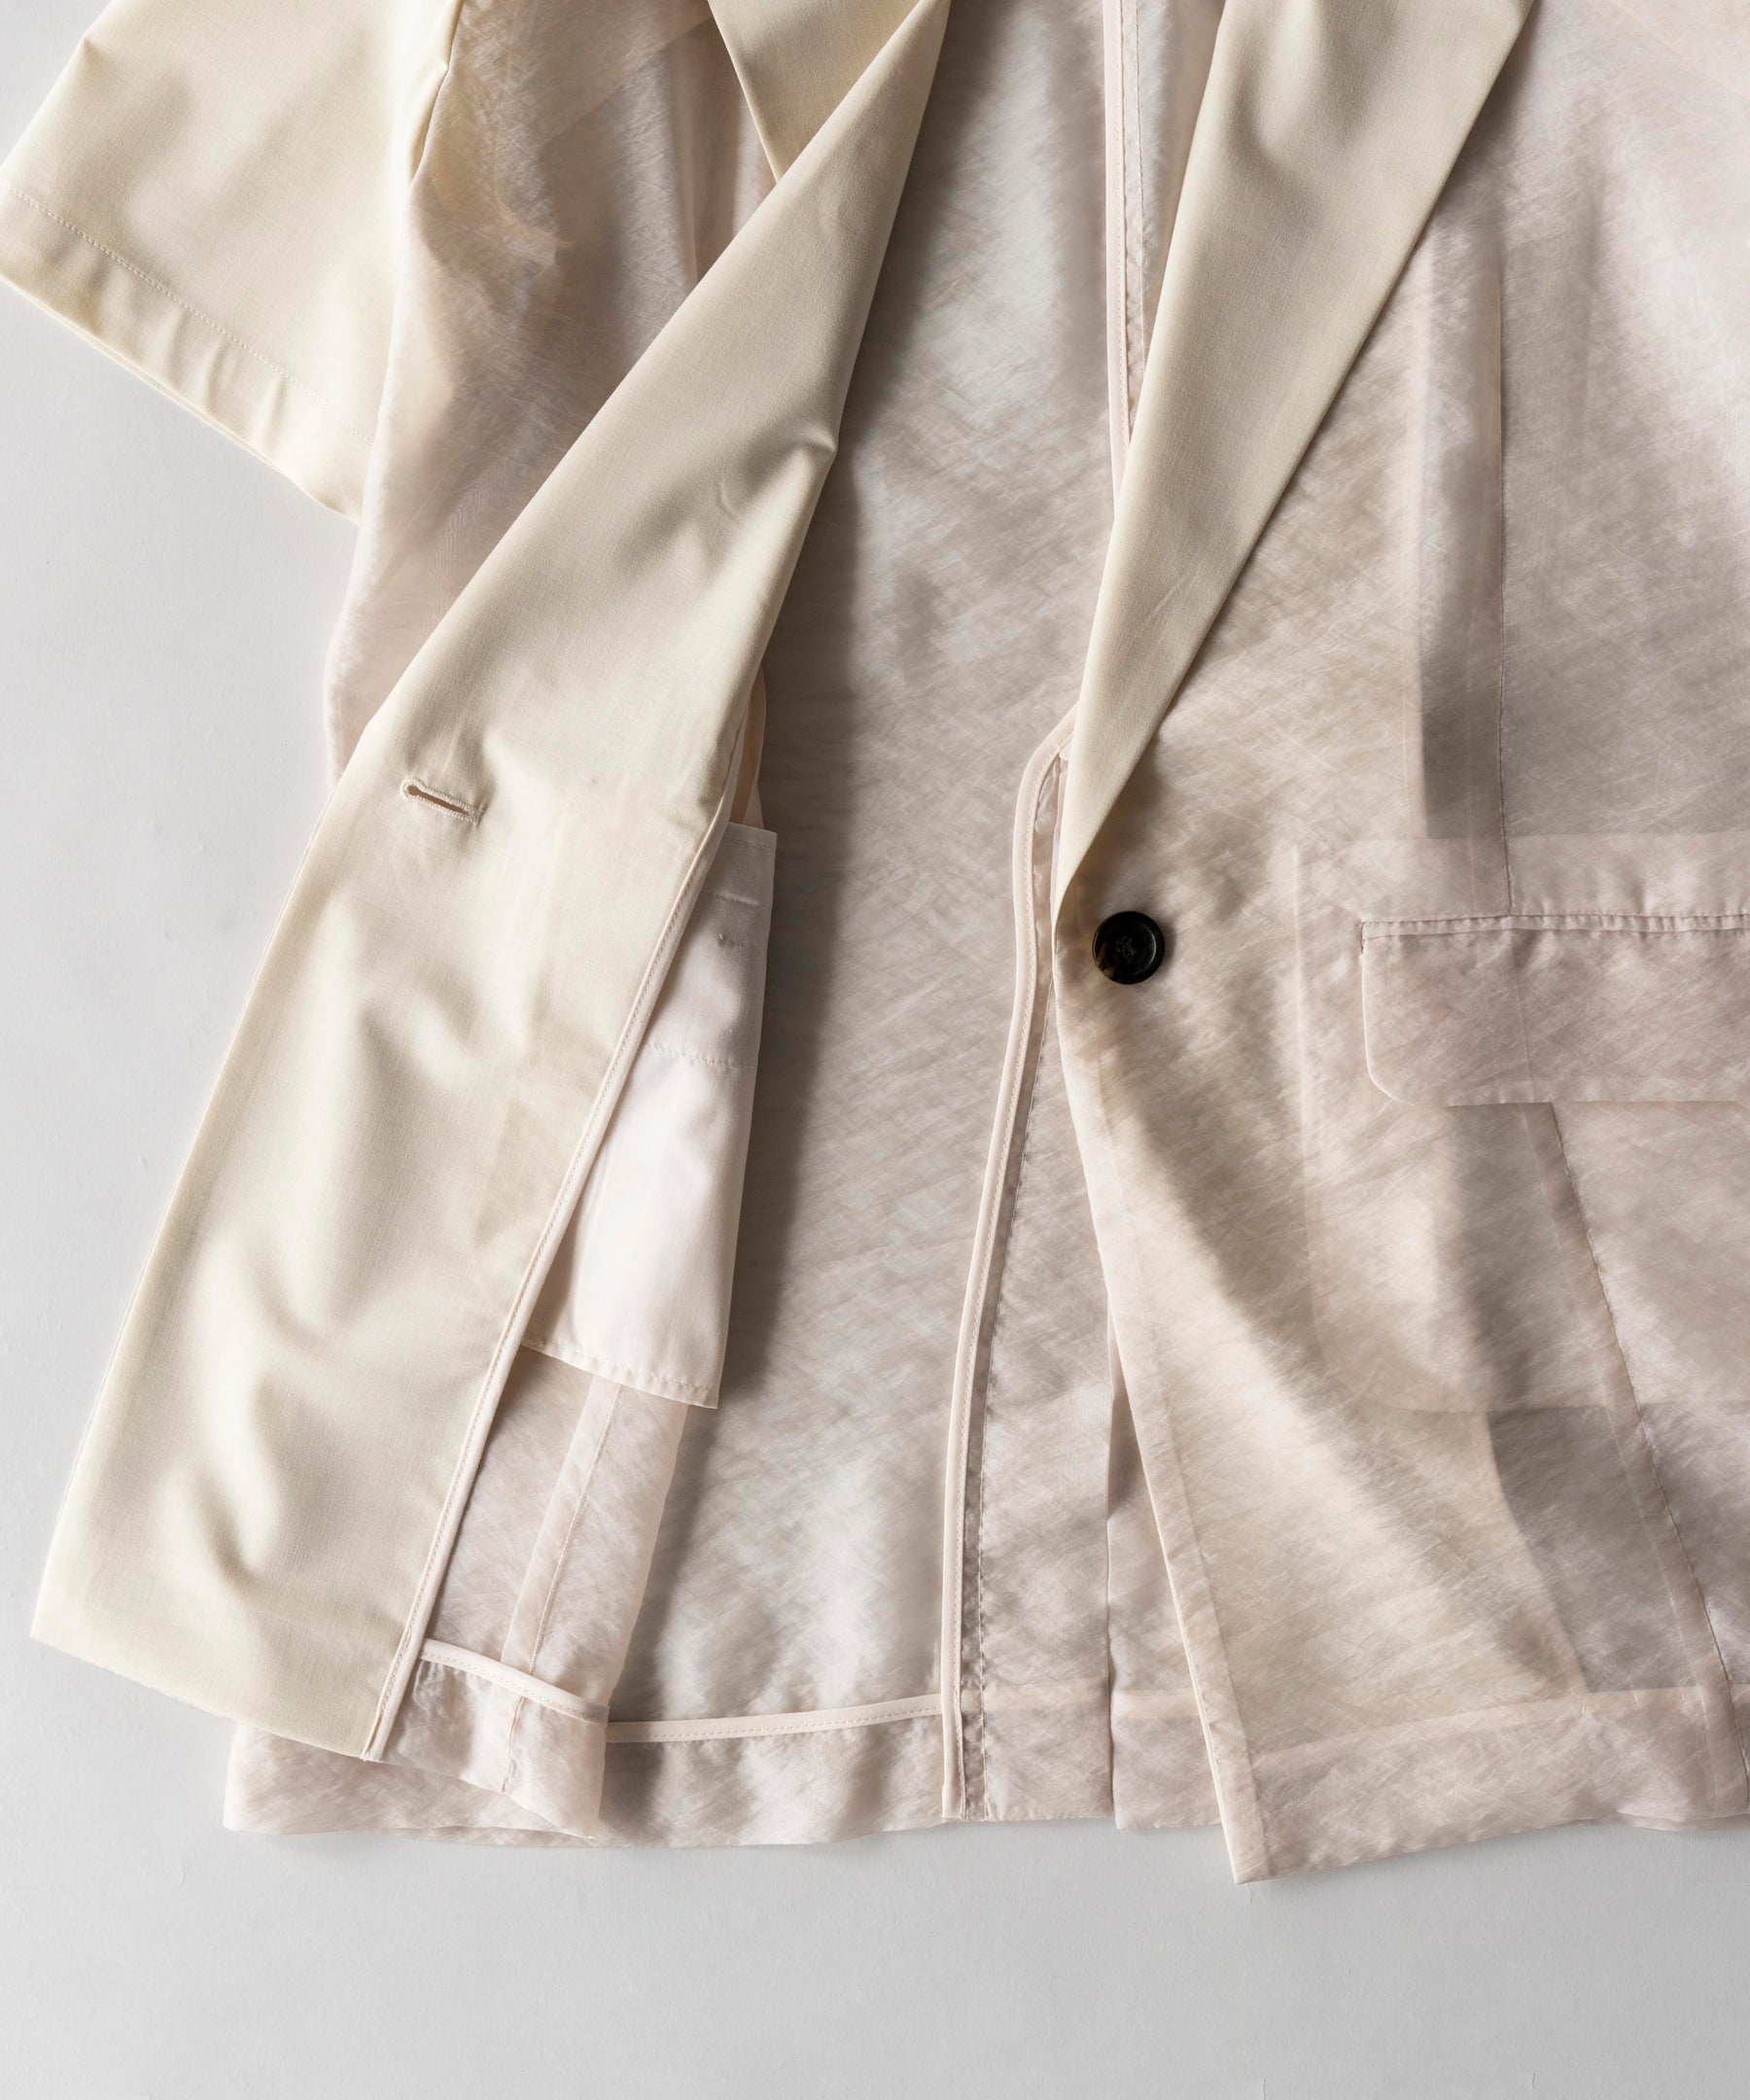 【SALE】Sheer Combination Jacket